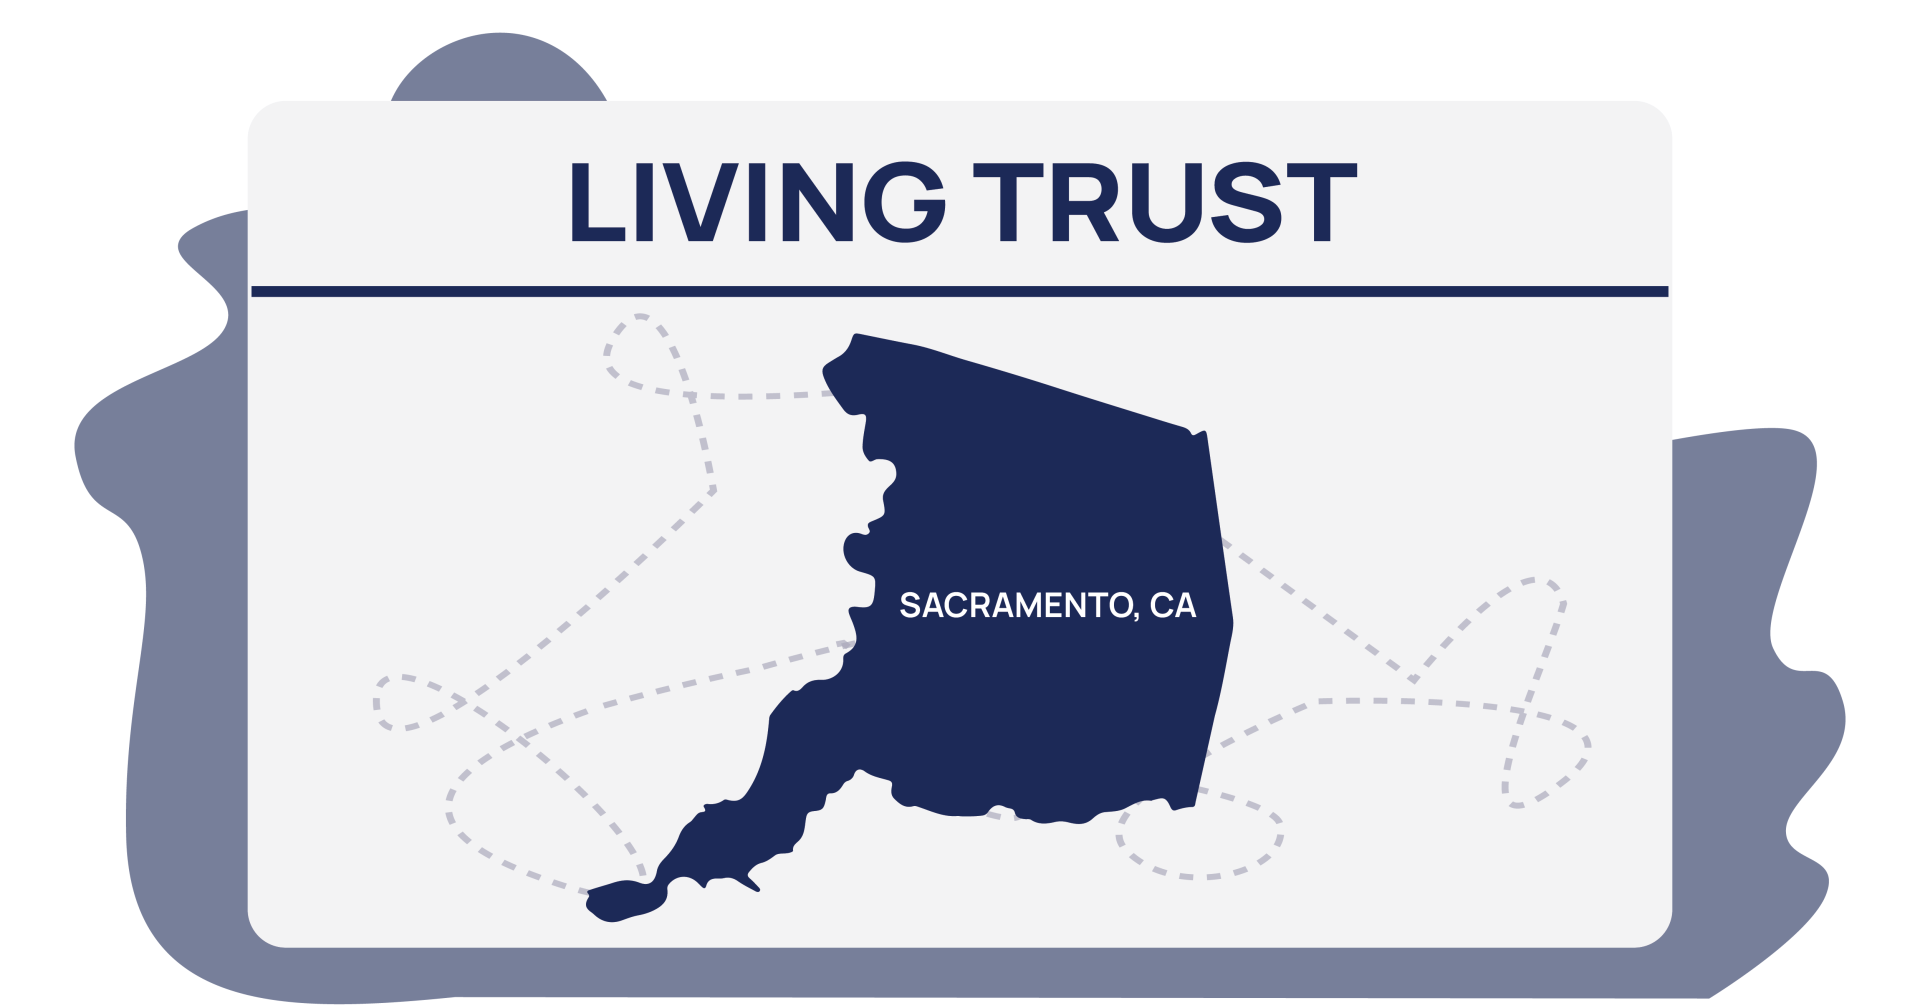 How To Set Up A Living Trust In Sacramento, California